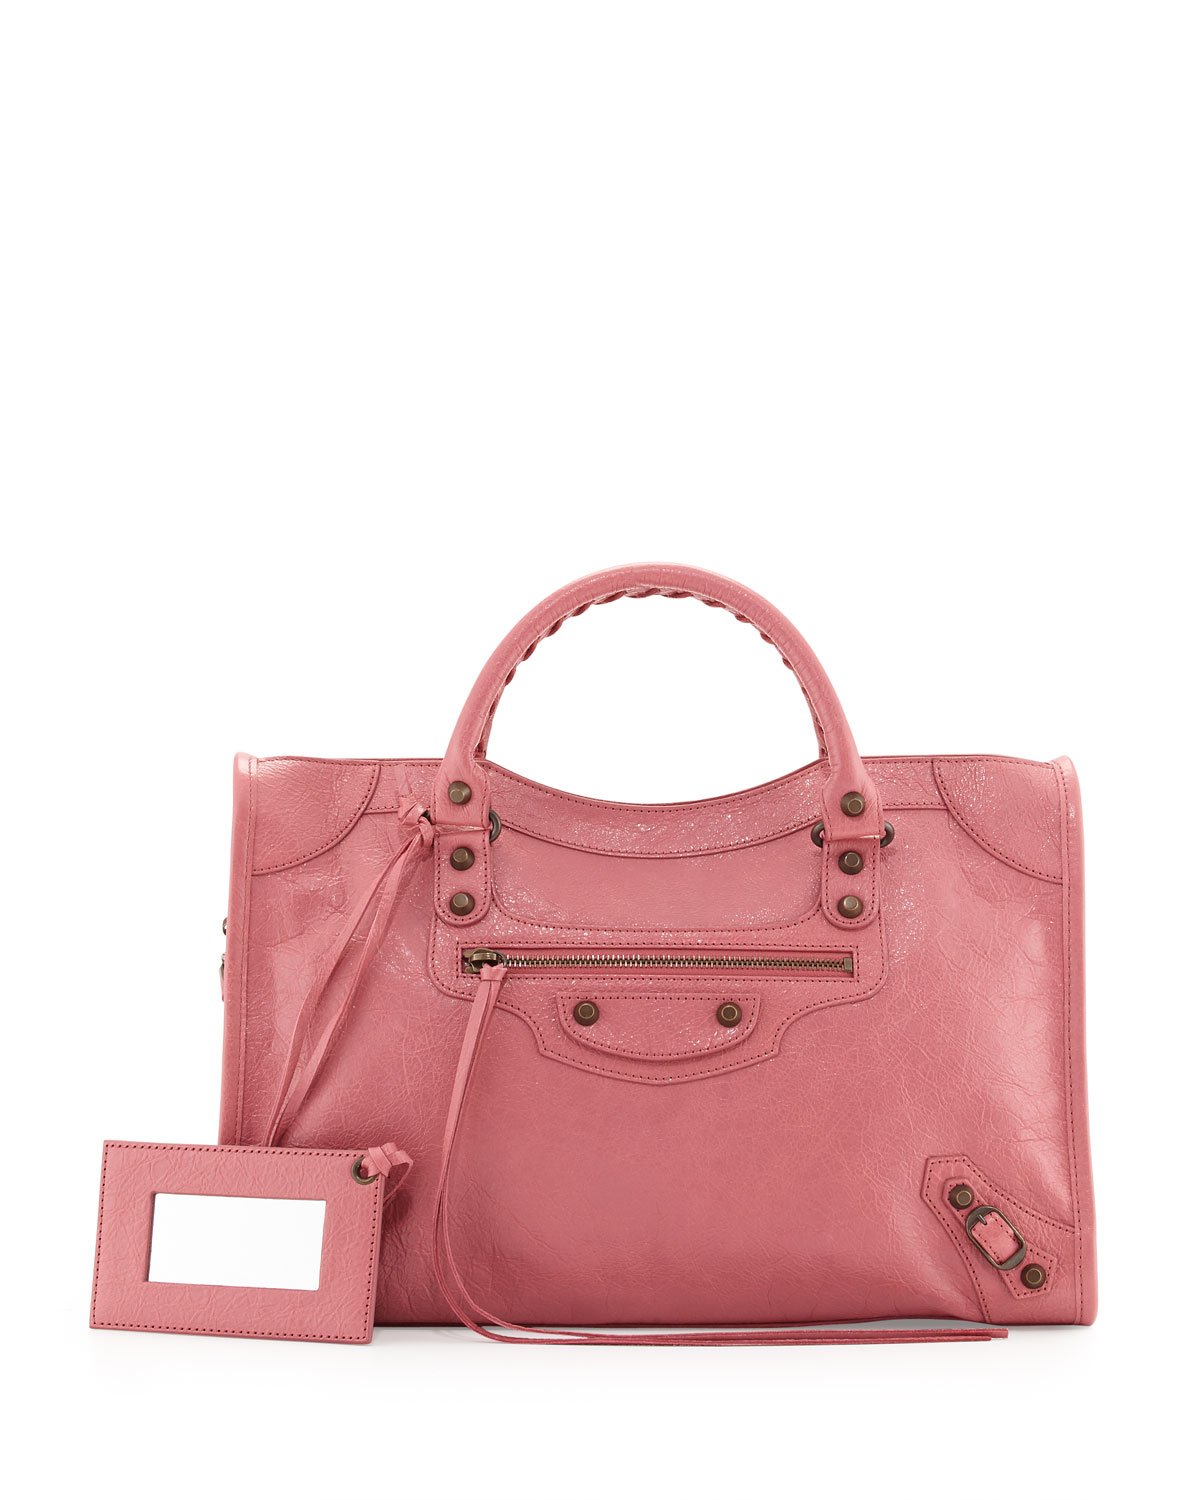 Balenciaga Classic City Lambskin Tote Bag in Pink (ROSE) | Lyst